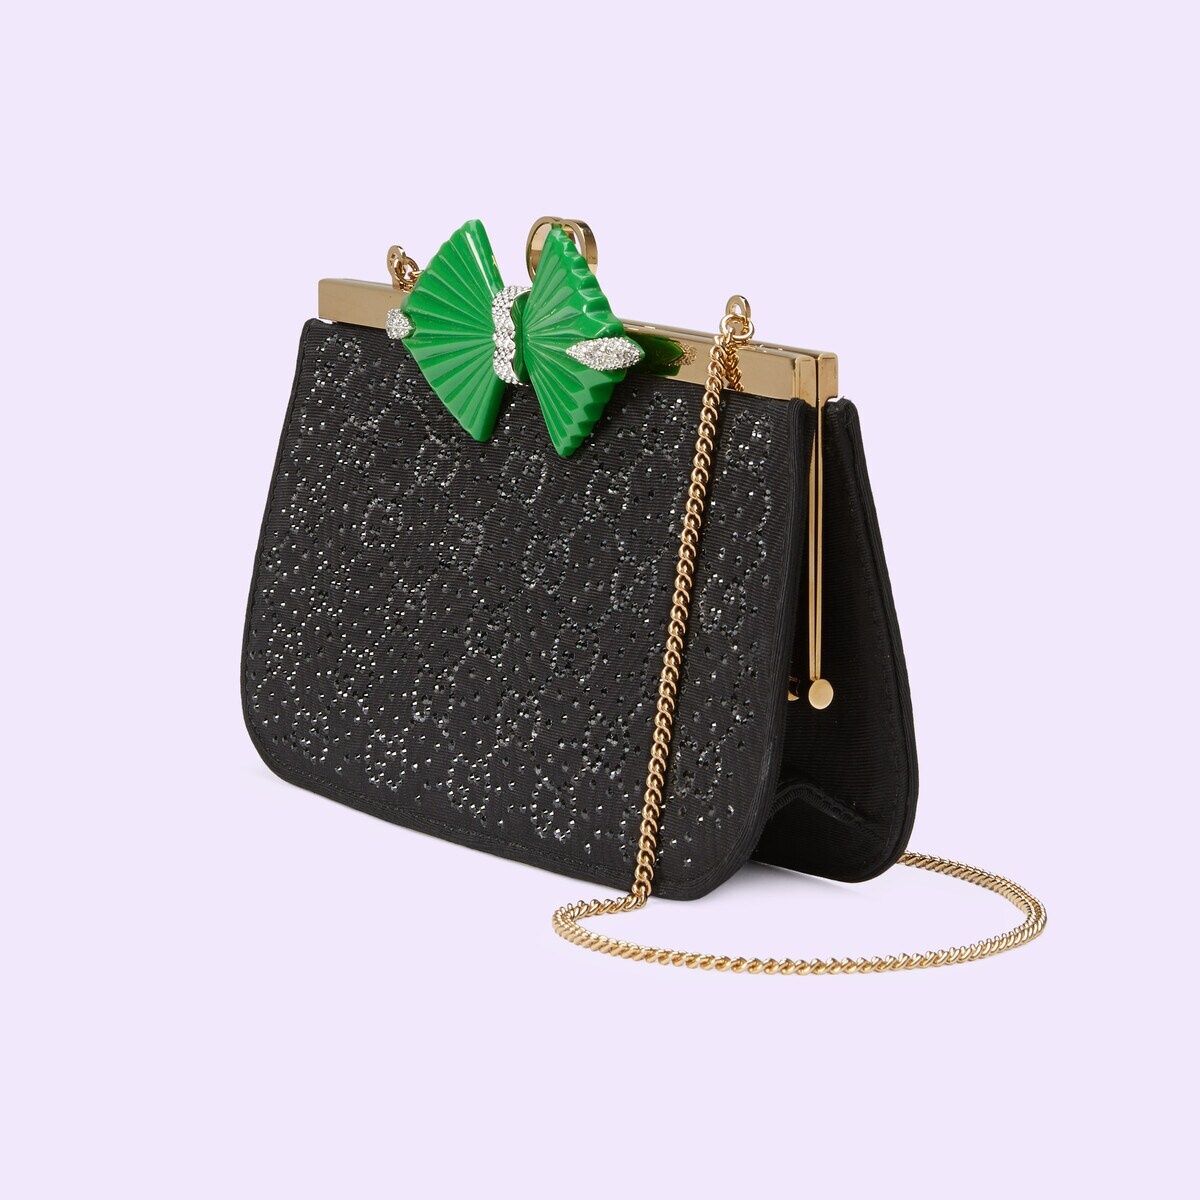 GG moire fabric handbag with bow - 2